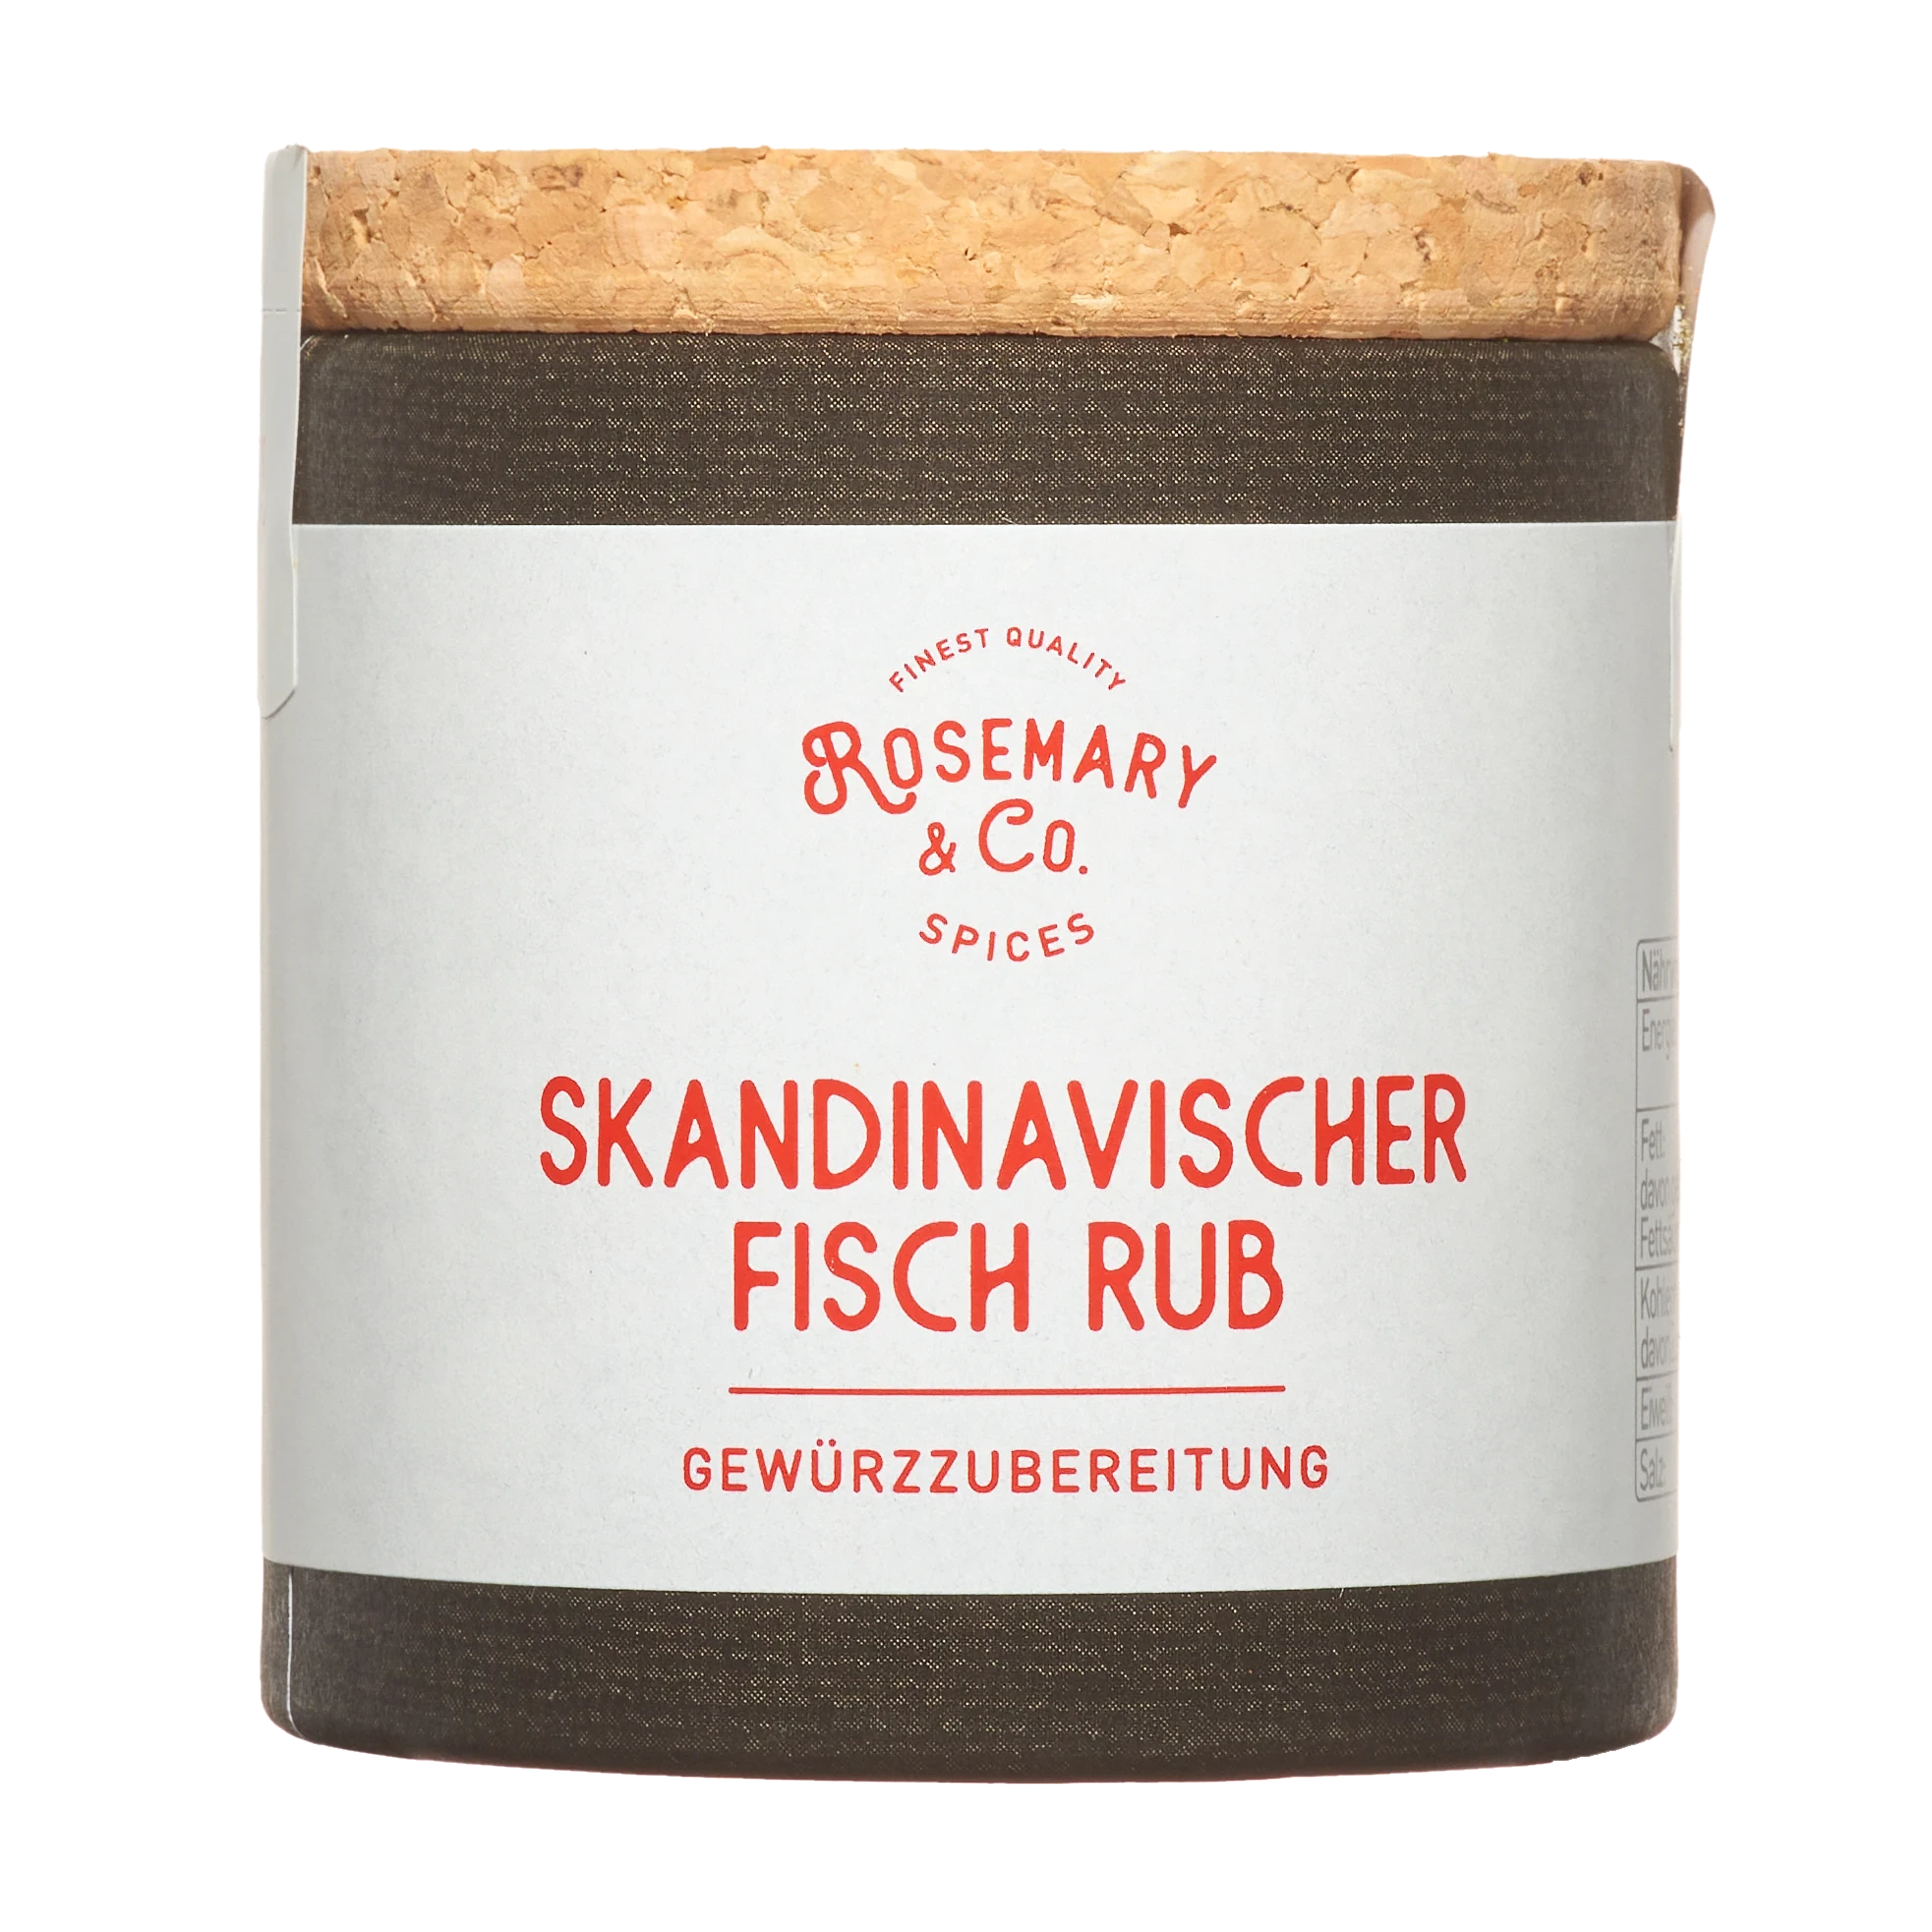 Rosemary & Co. Skandinavischer Fisch Rub